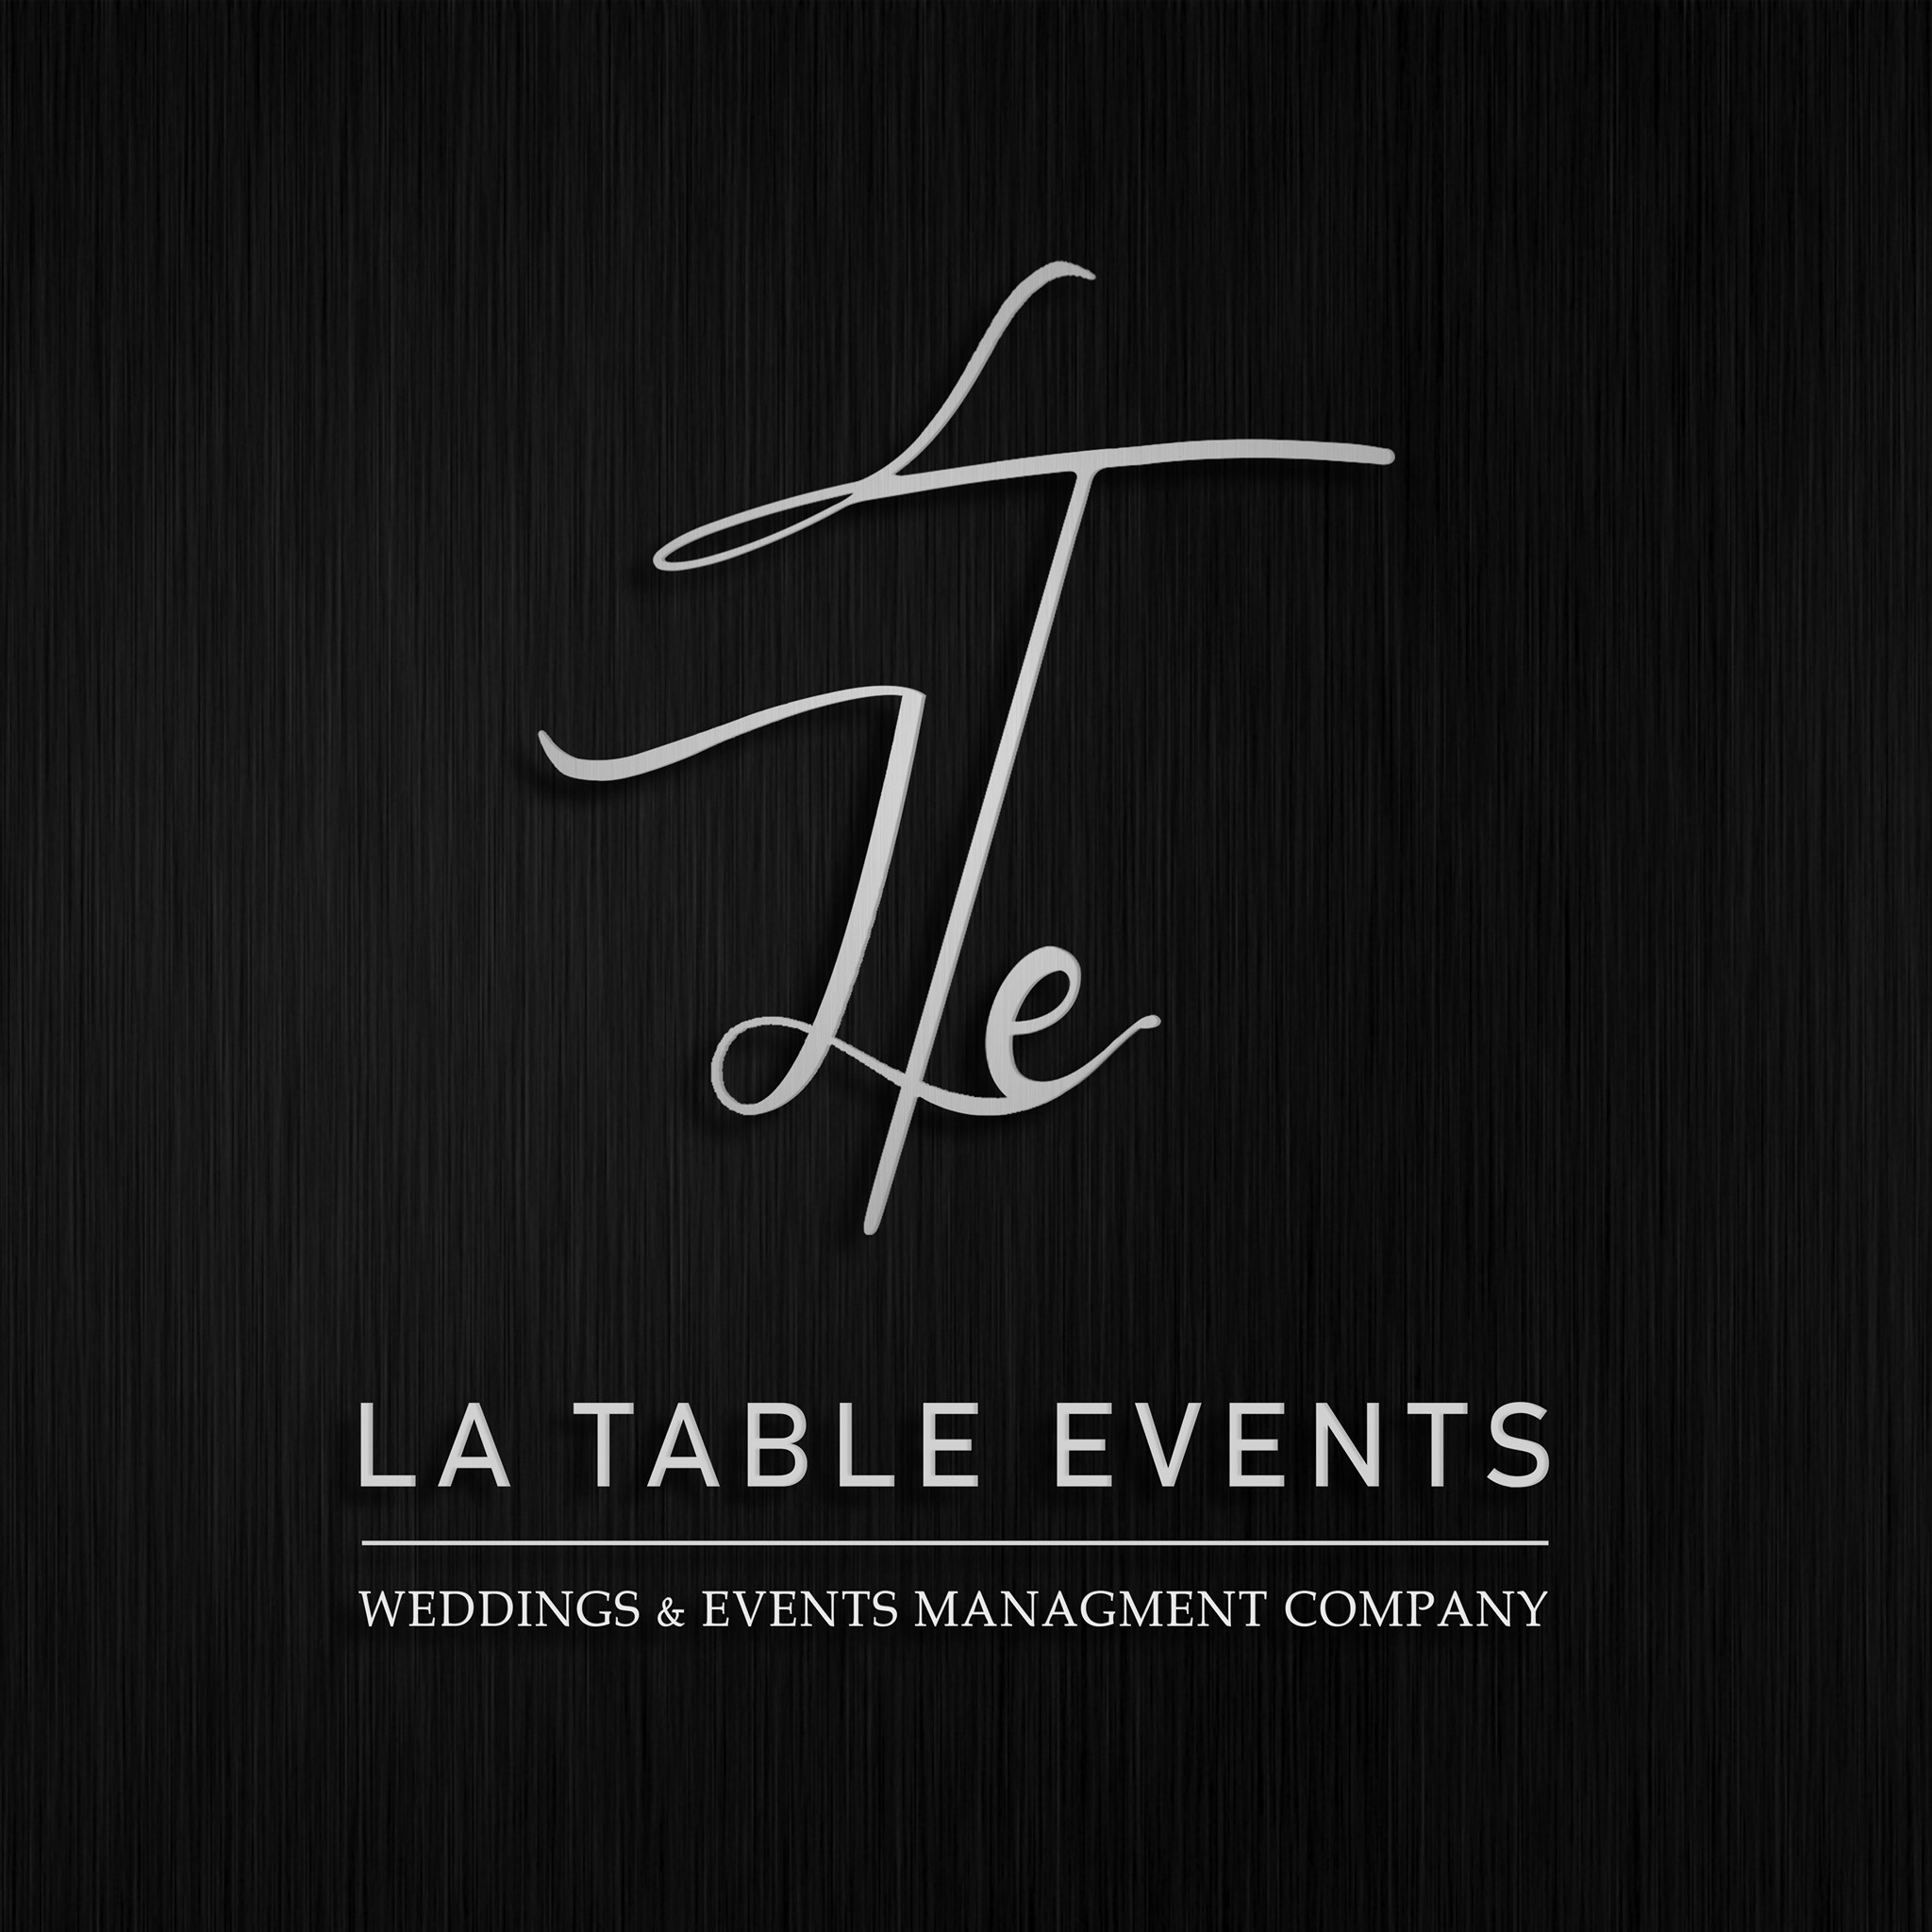 Latable Events UAE